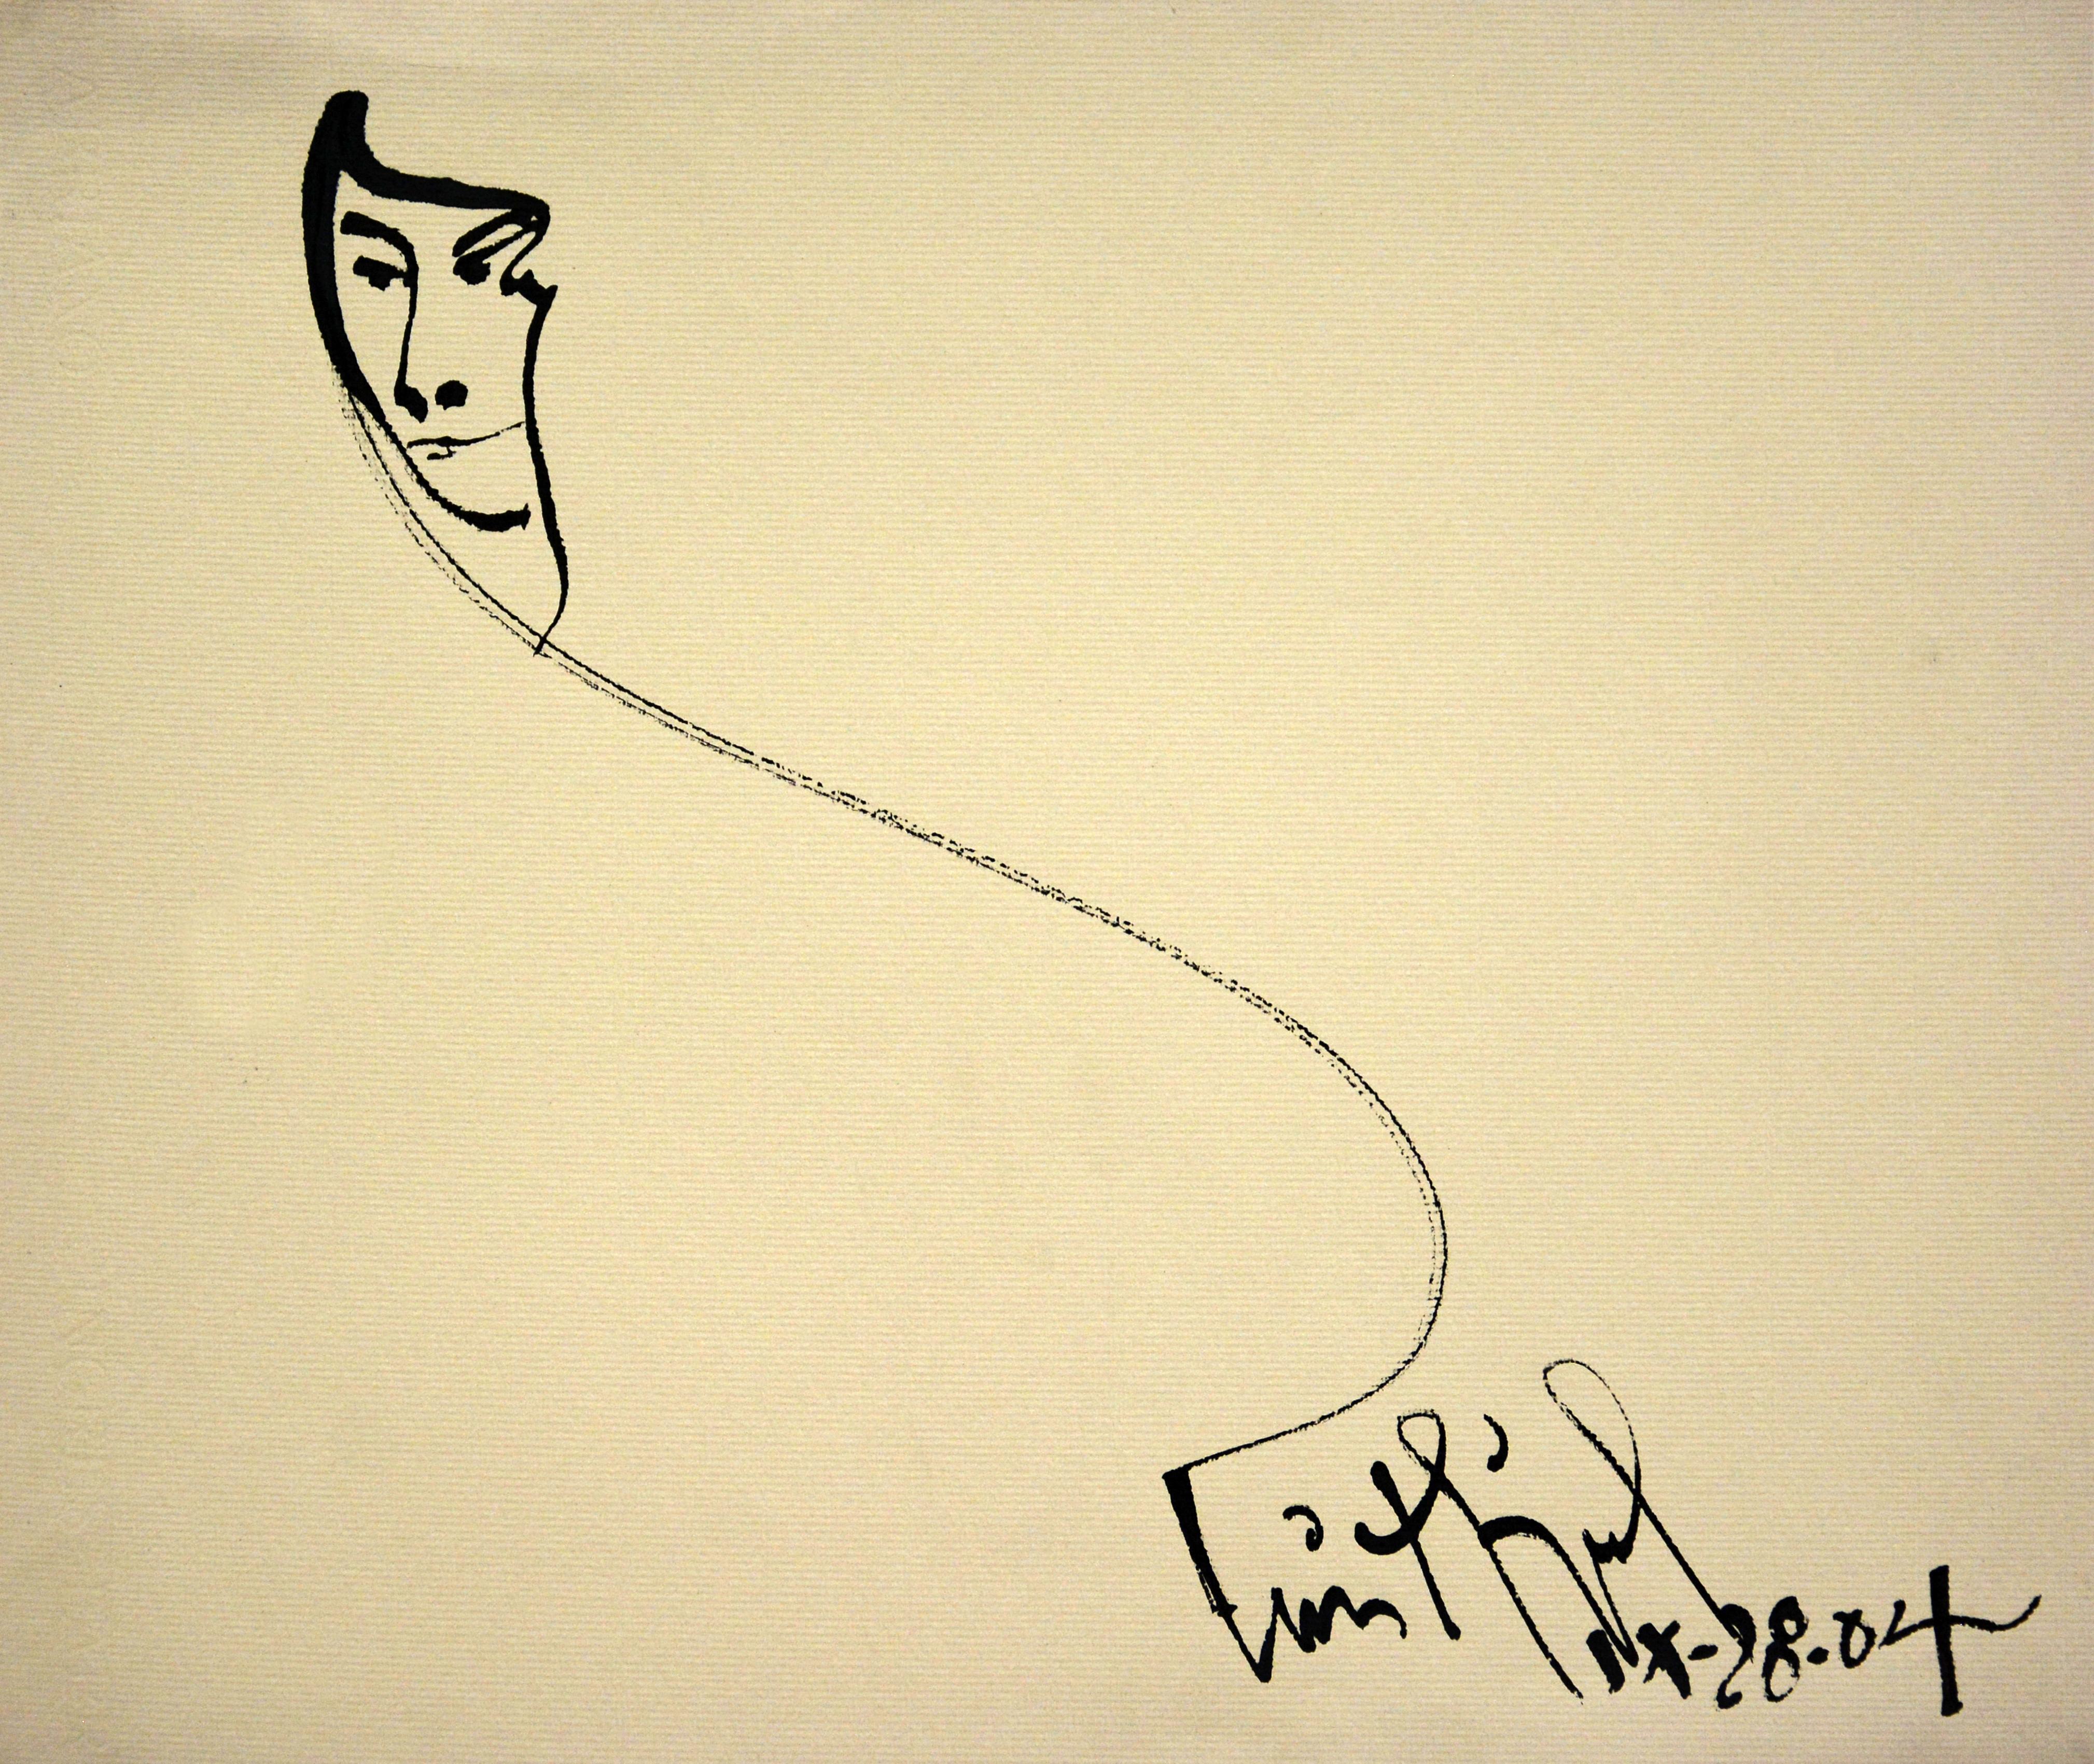 Luis Miguel Valdes  Figurative Art - Luis Miguel Valdes, ¨Linea con cara-1¨, 2004, Work on paper, 11.8x13.8 in